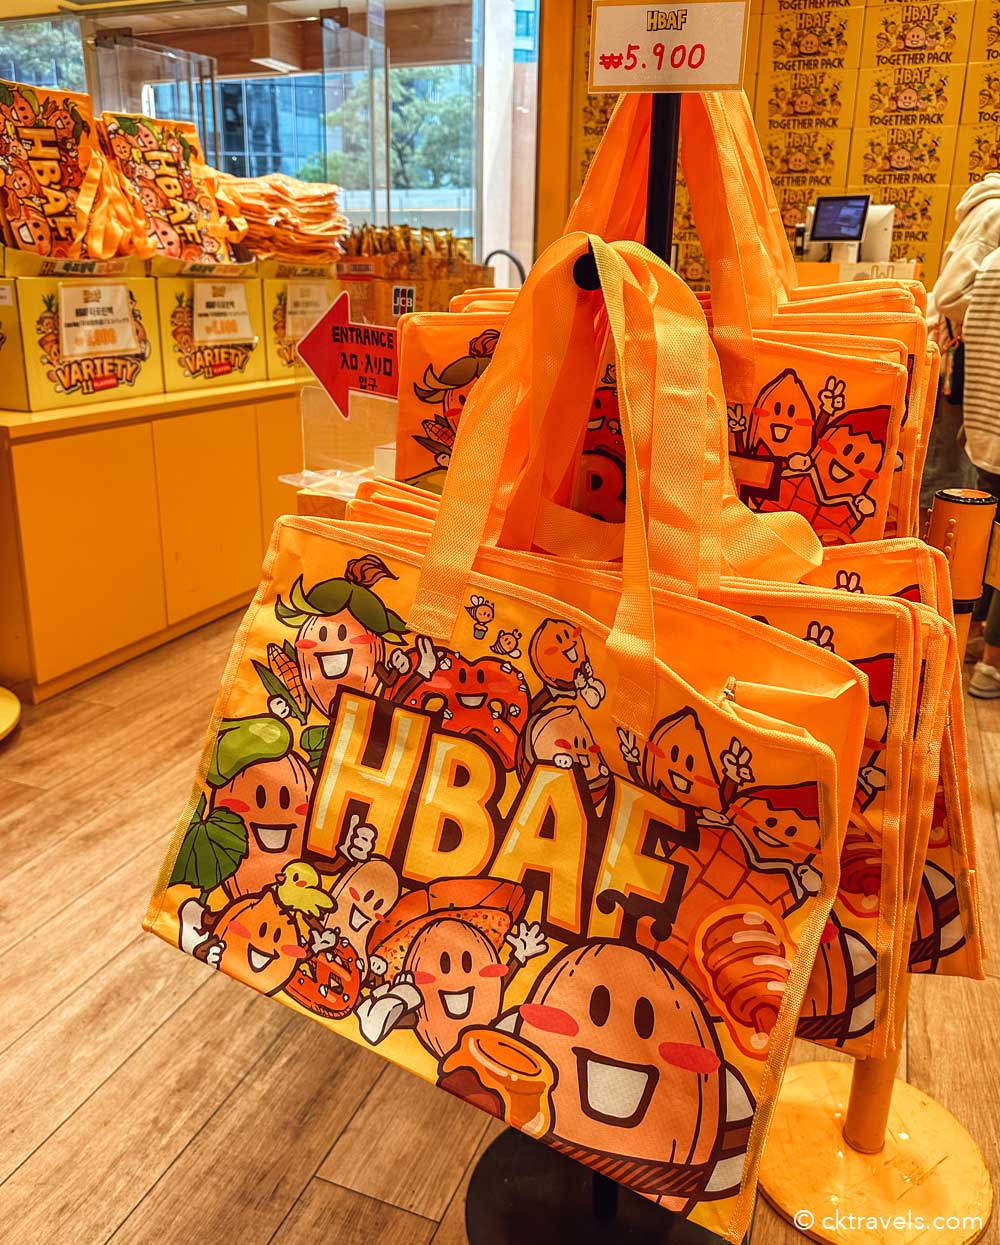 HBAF shopping tote bag